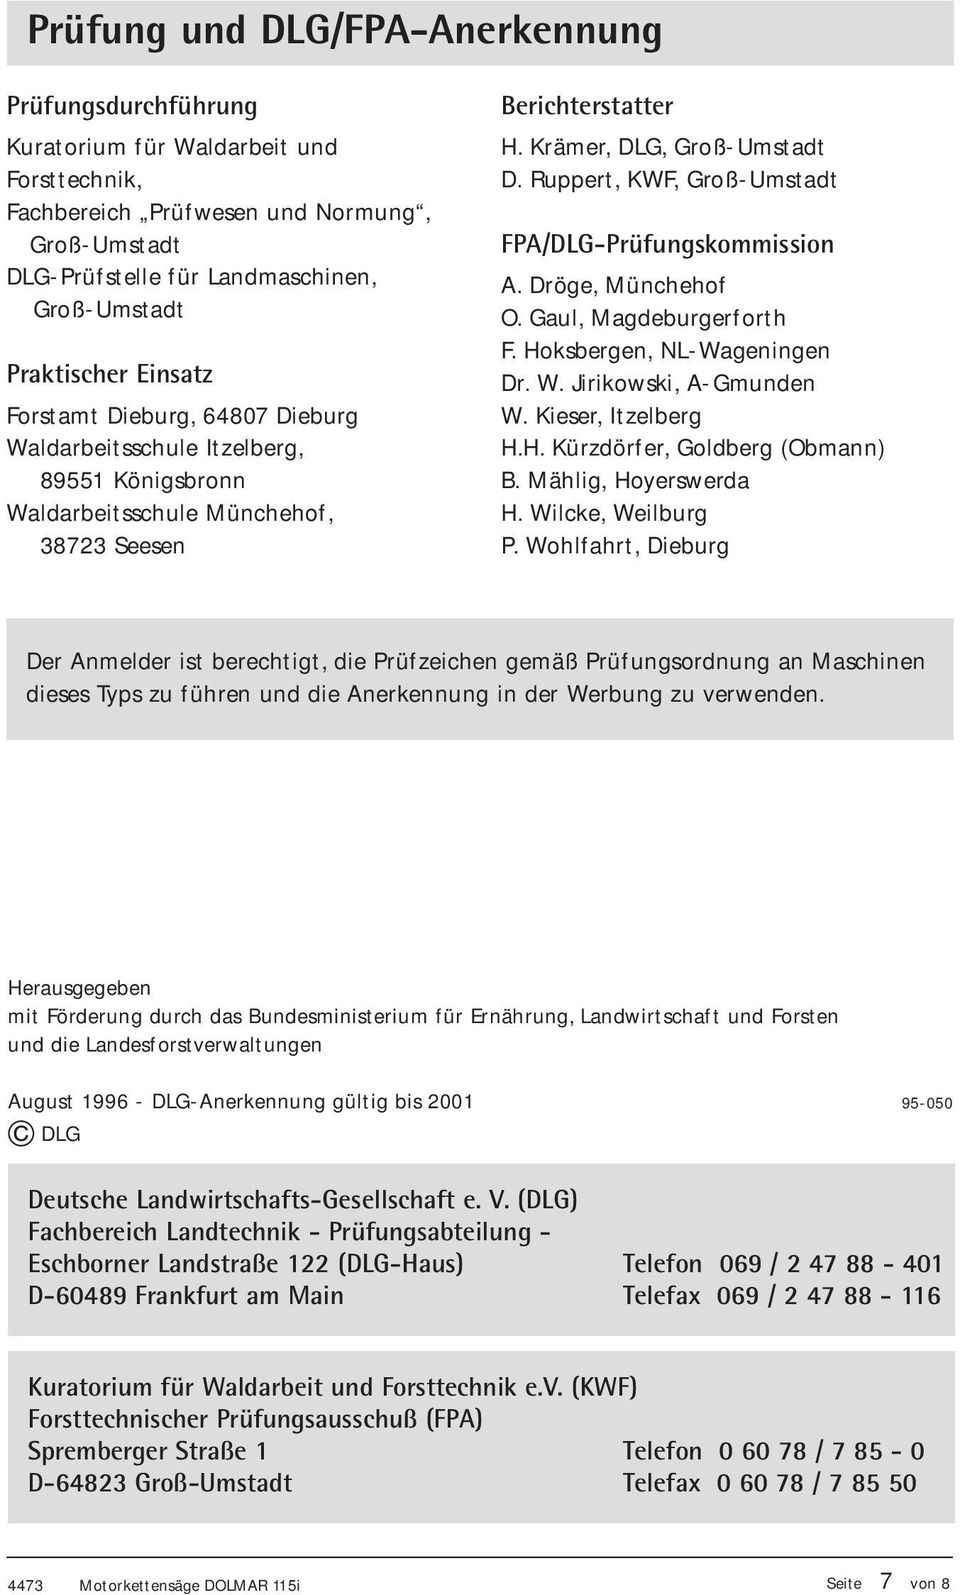 Ruppert, KWF, Groß-Umstadt FPA/DLG-Prüfungskommission A. Dröge, Münchehof O. Gaul, Magdeburgerforth F. Hoksbergen, NL-Wageningen Dr. W. Jirikowski, A-Gmunden W. Kieser, Itzelberg H.H. Kürzdörfer, Goldberg (Obmann) B.